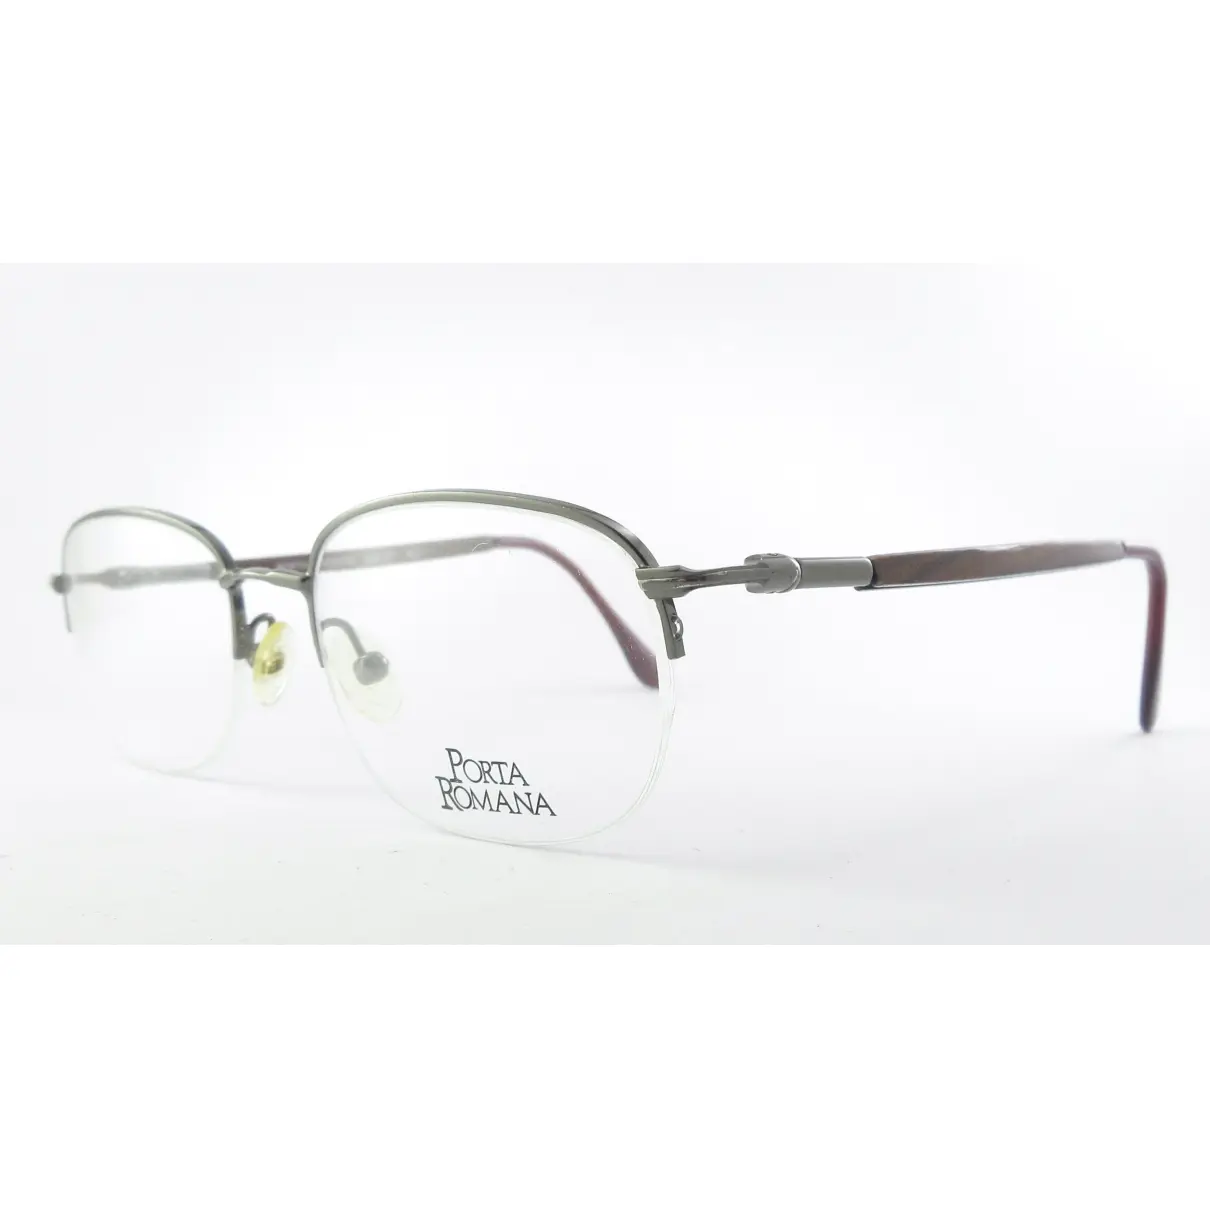 Buy Porta Romana Sunglasses online